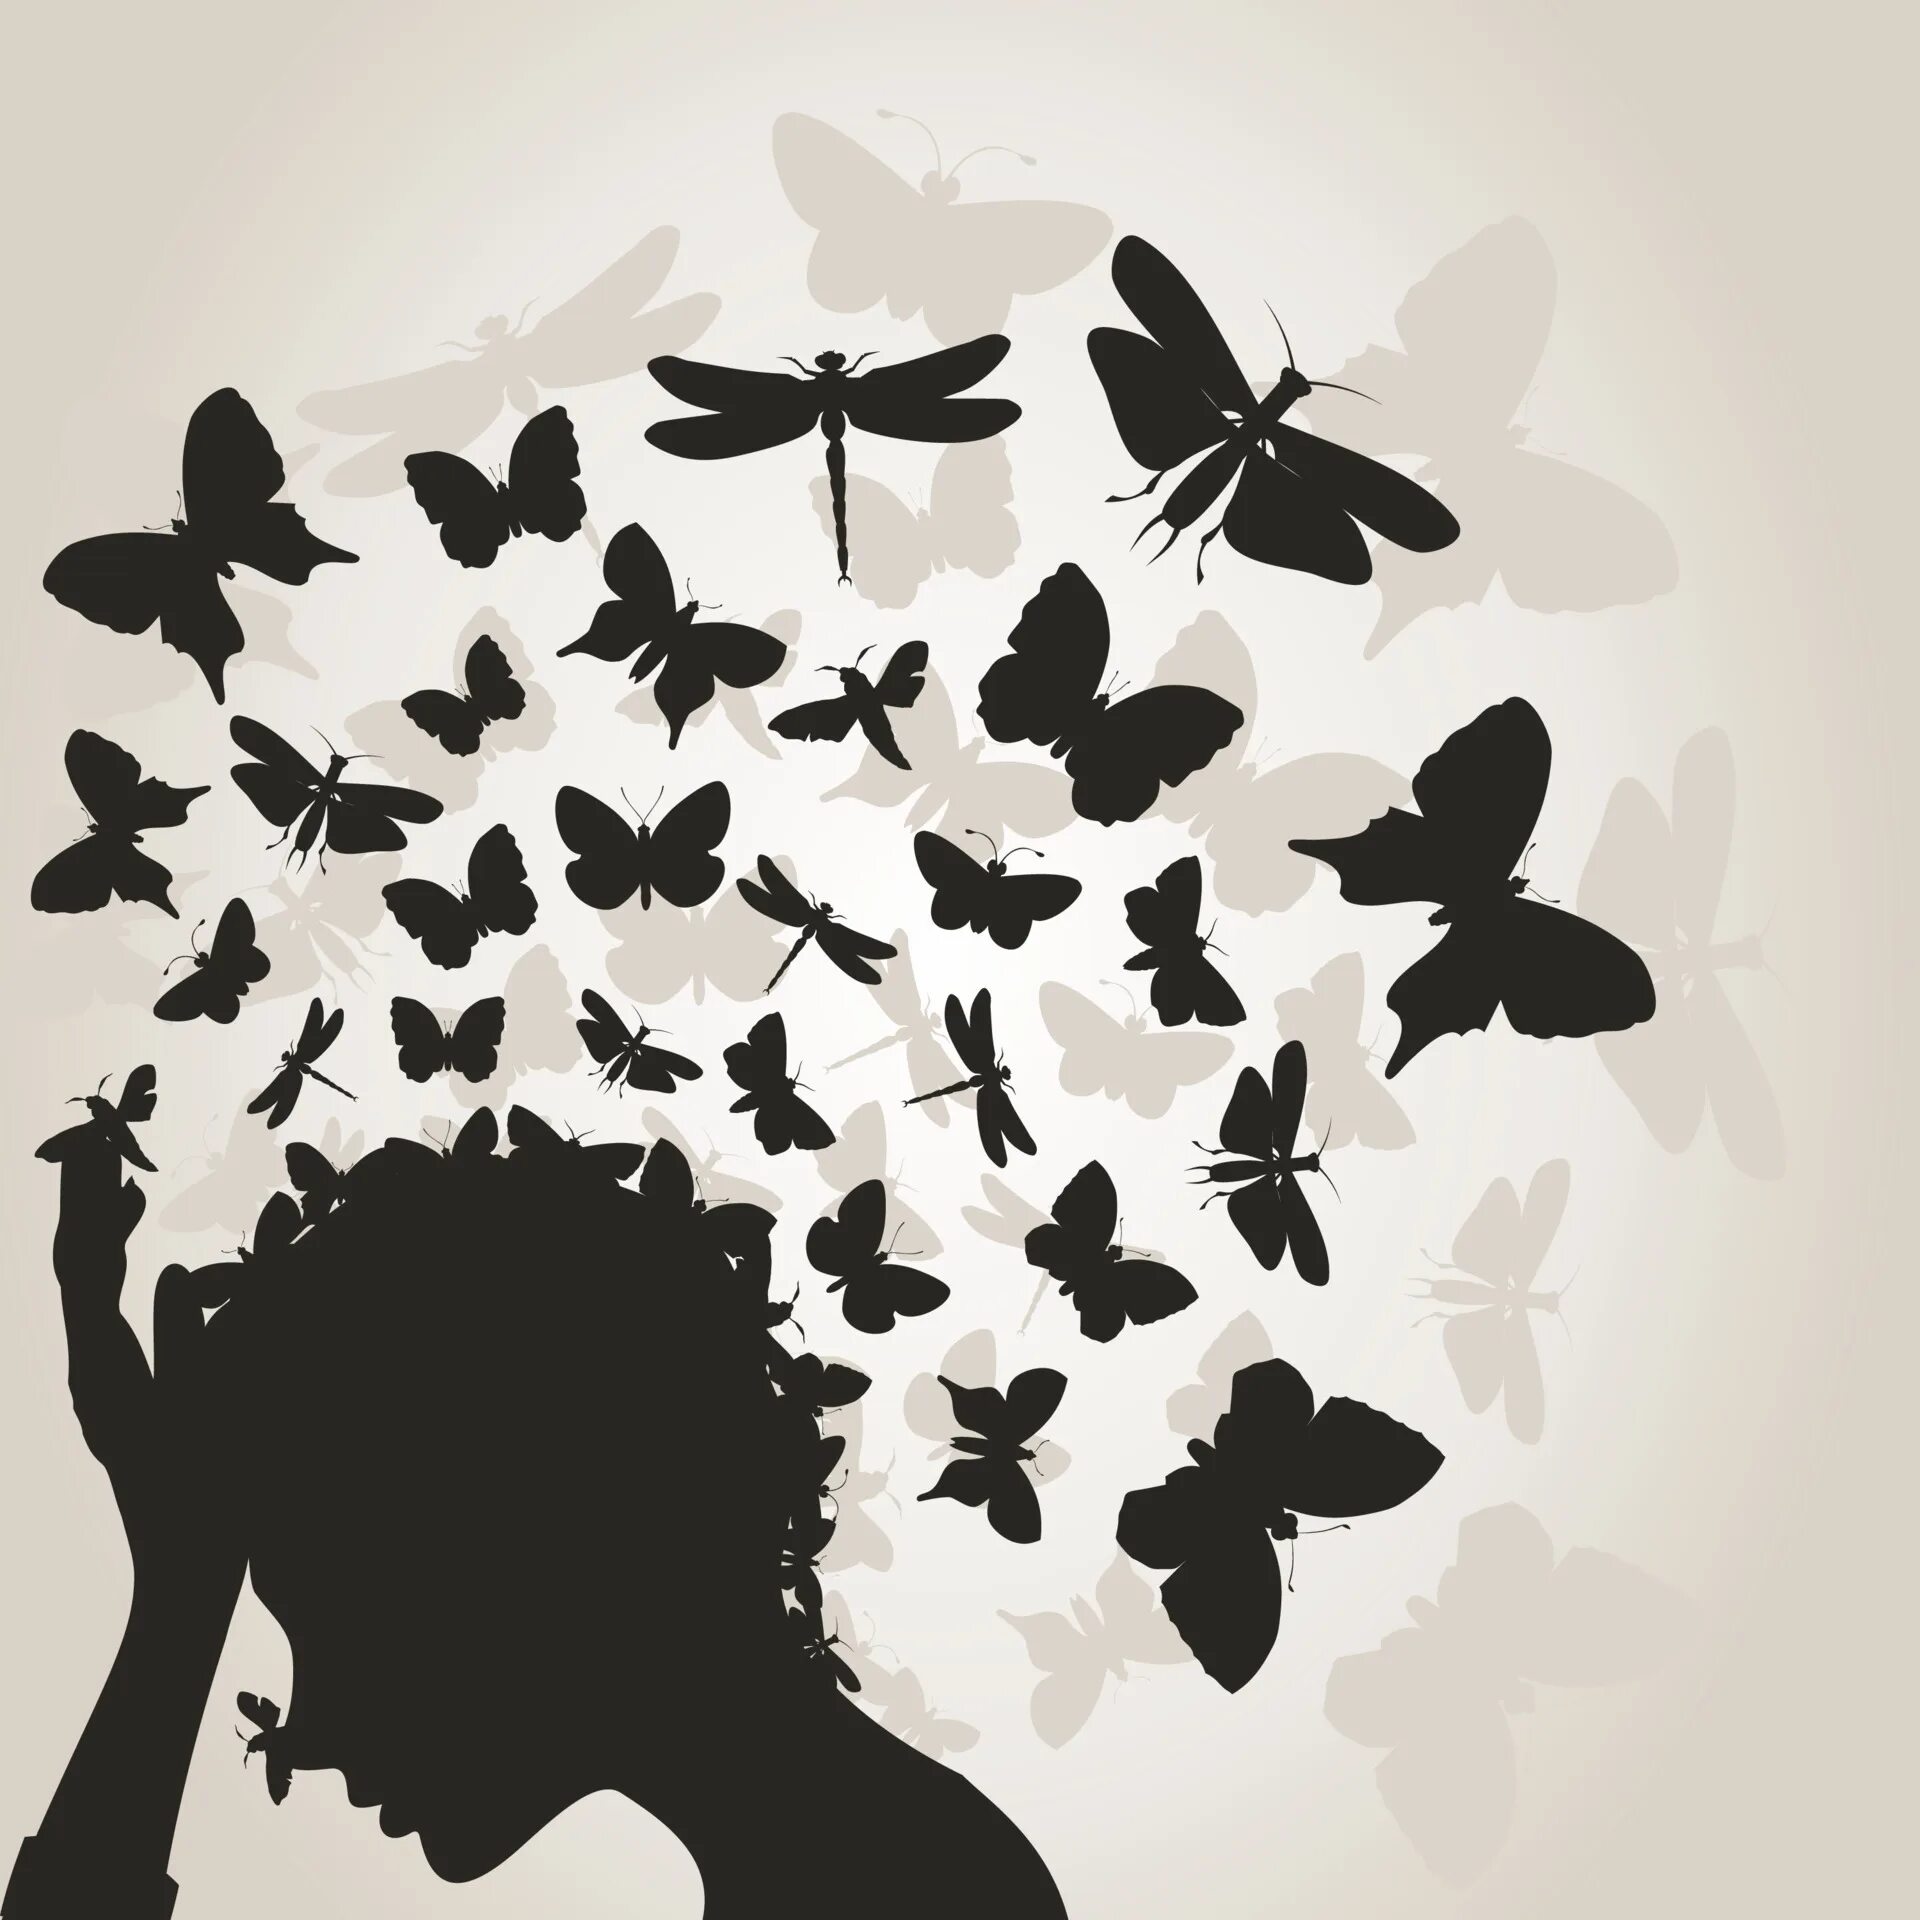 Бабочка над головой. Голова бабочки. Силуэт девушки с бабочками. Девушка из бабочек. Женщина с бабочками на голове.